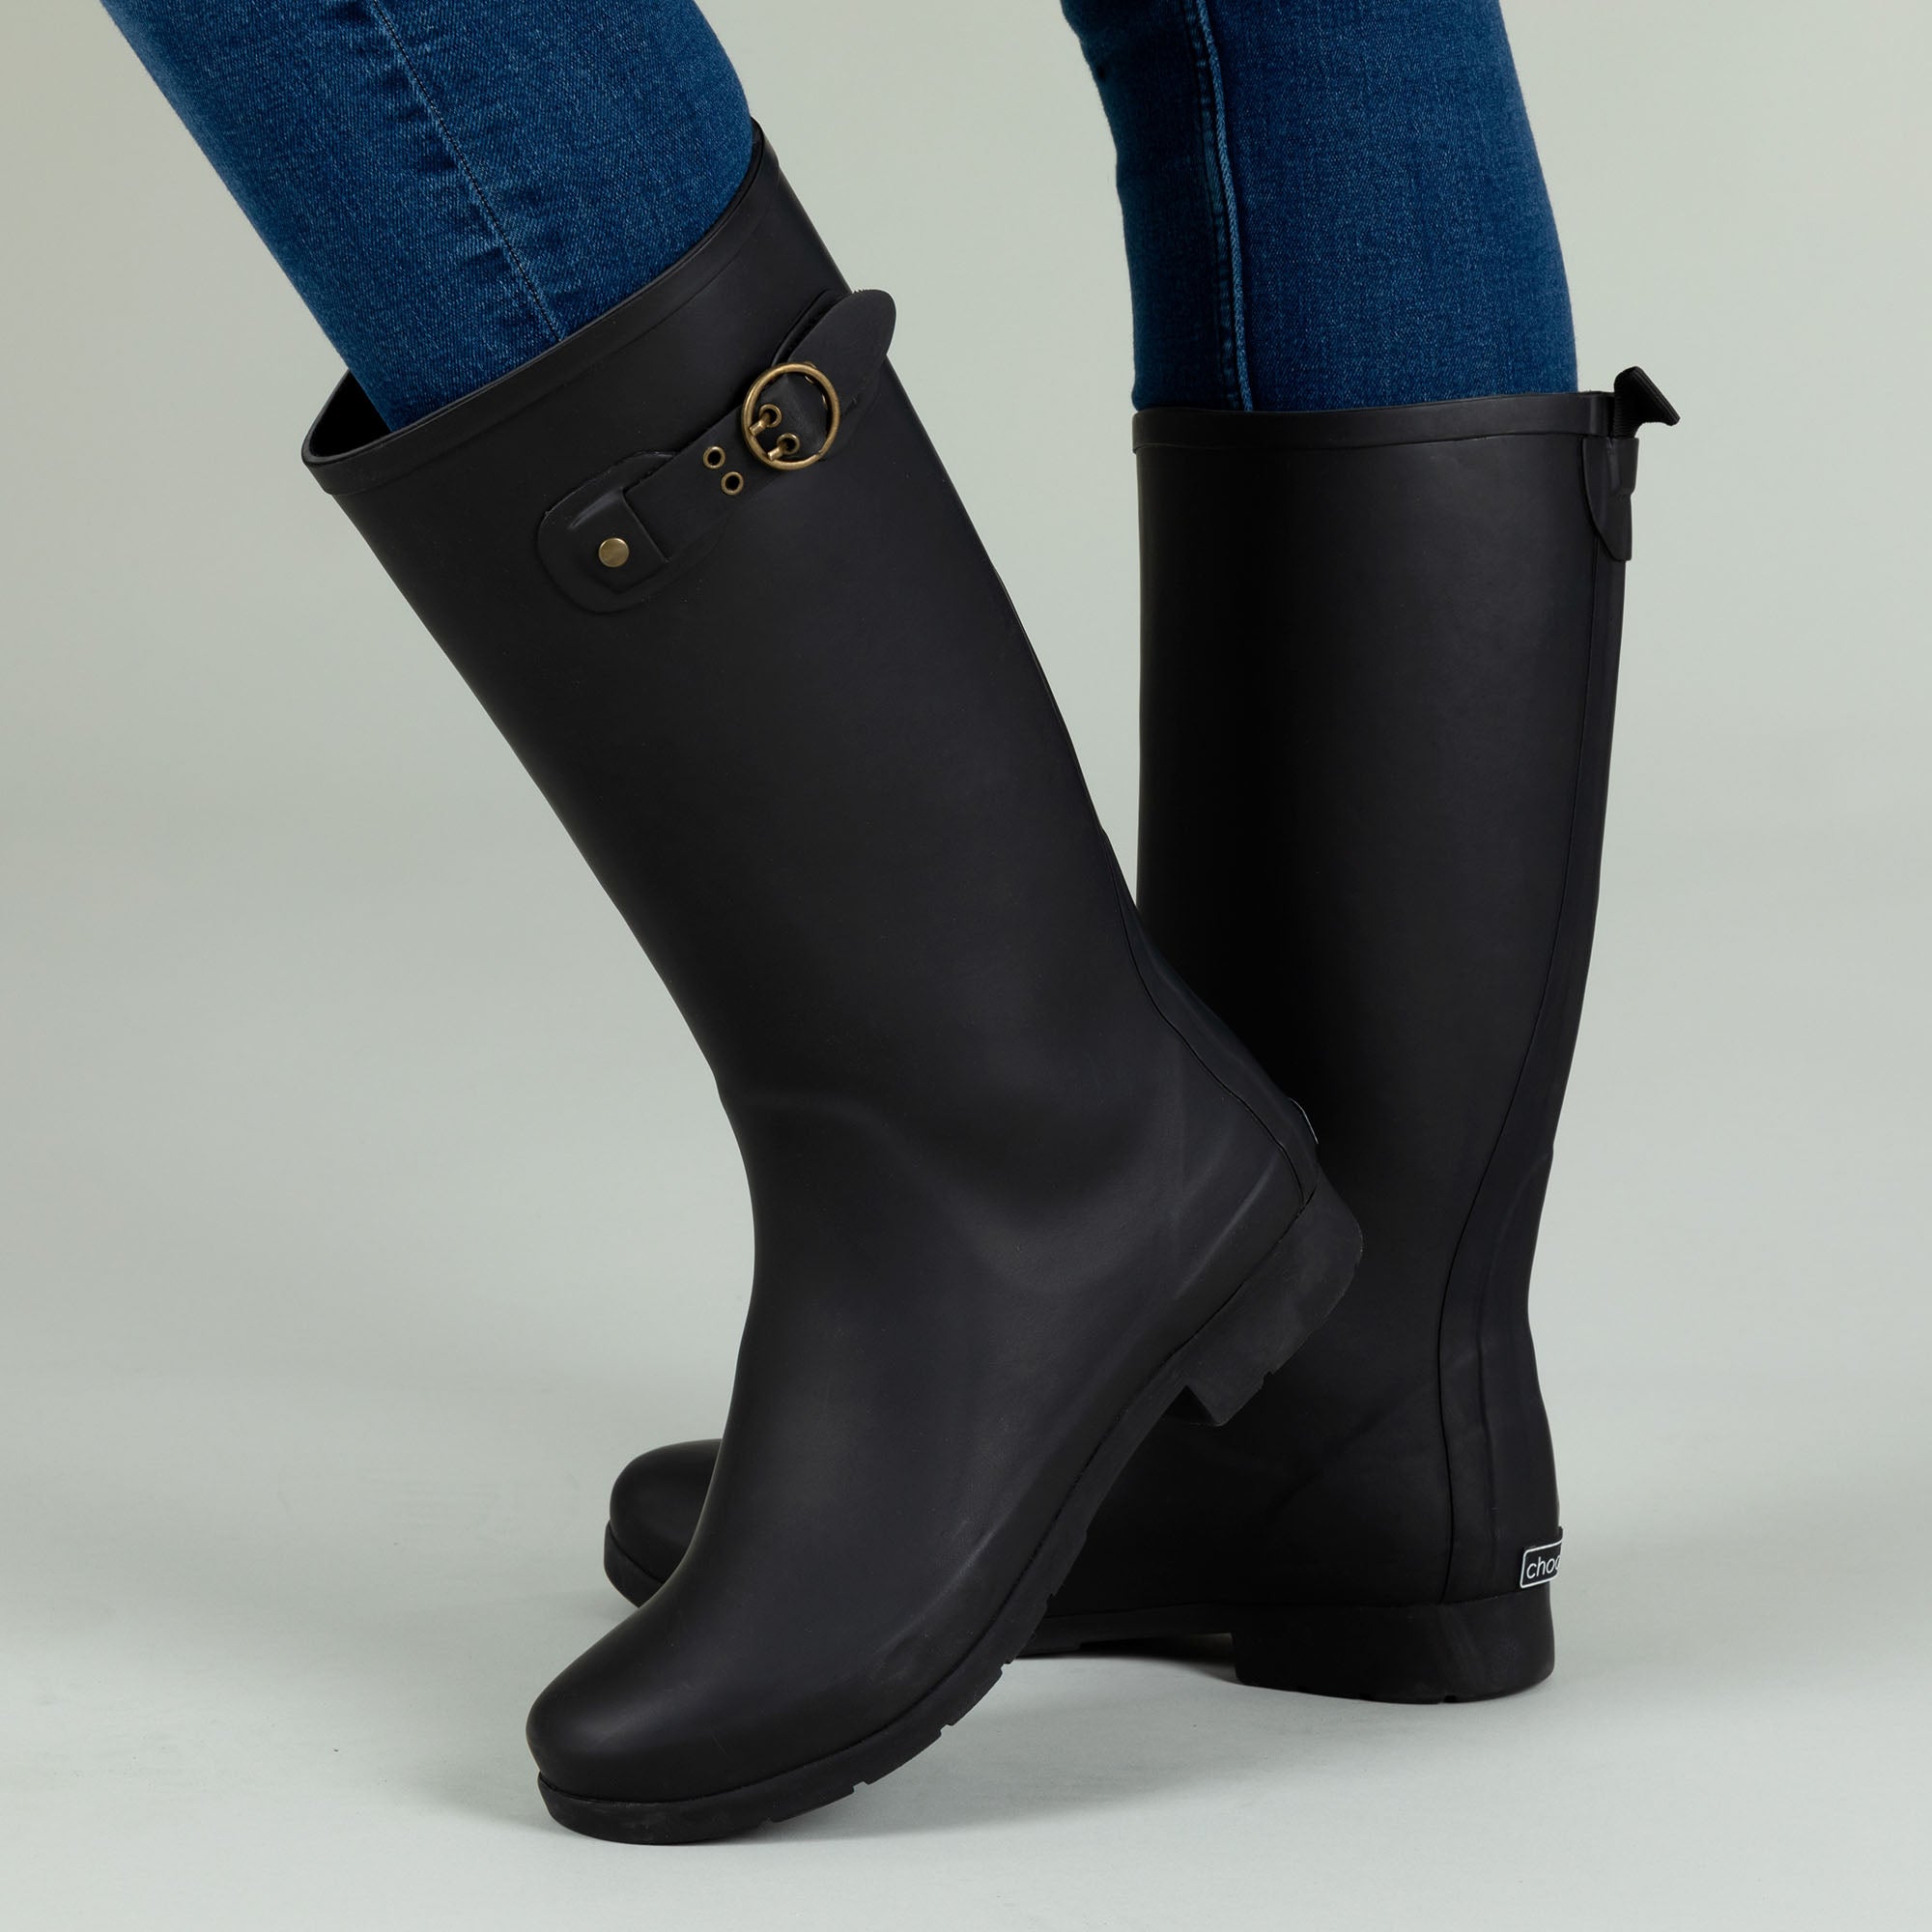 Eastlake Classic Tall Rain Boots - Black - 6